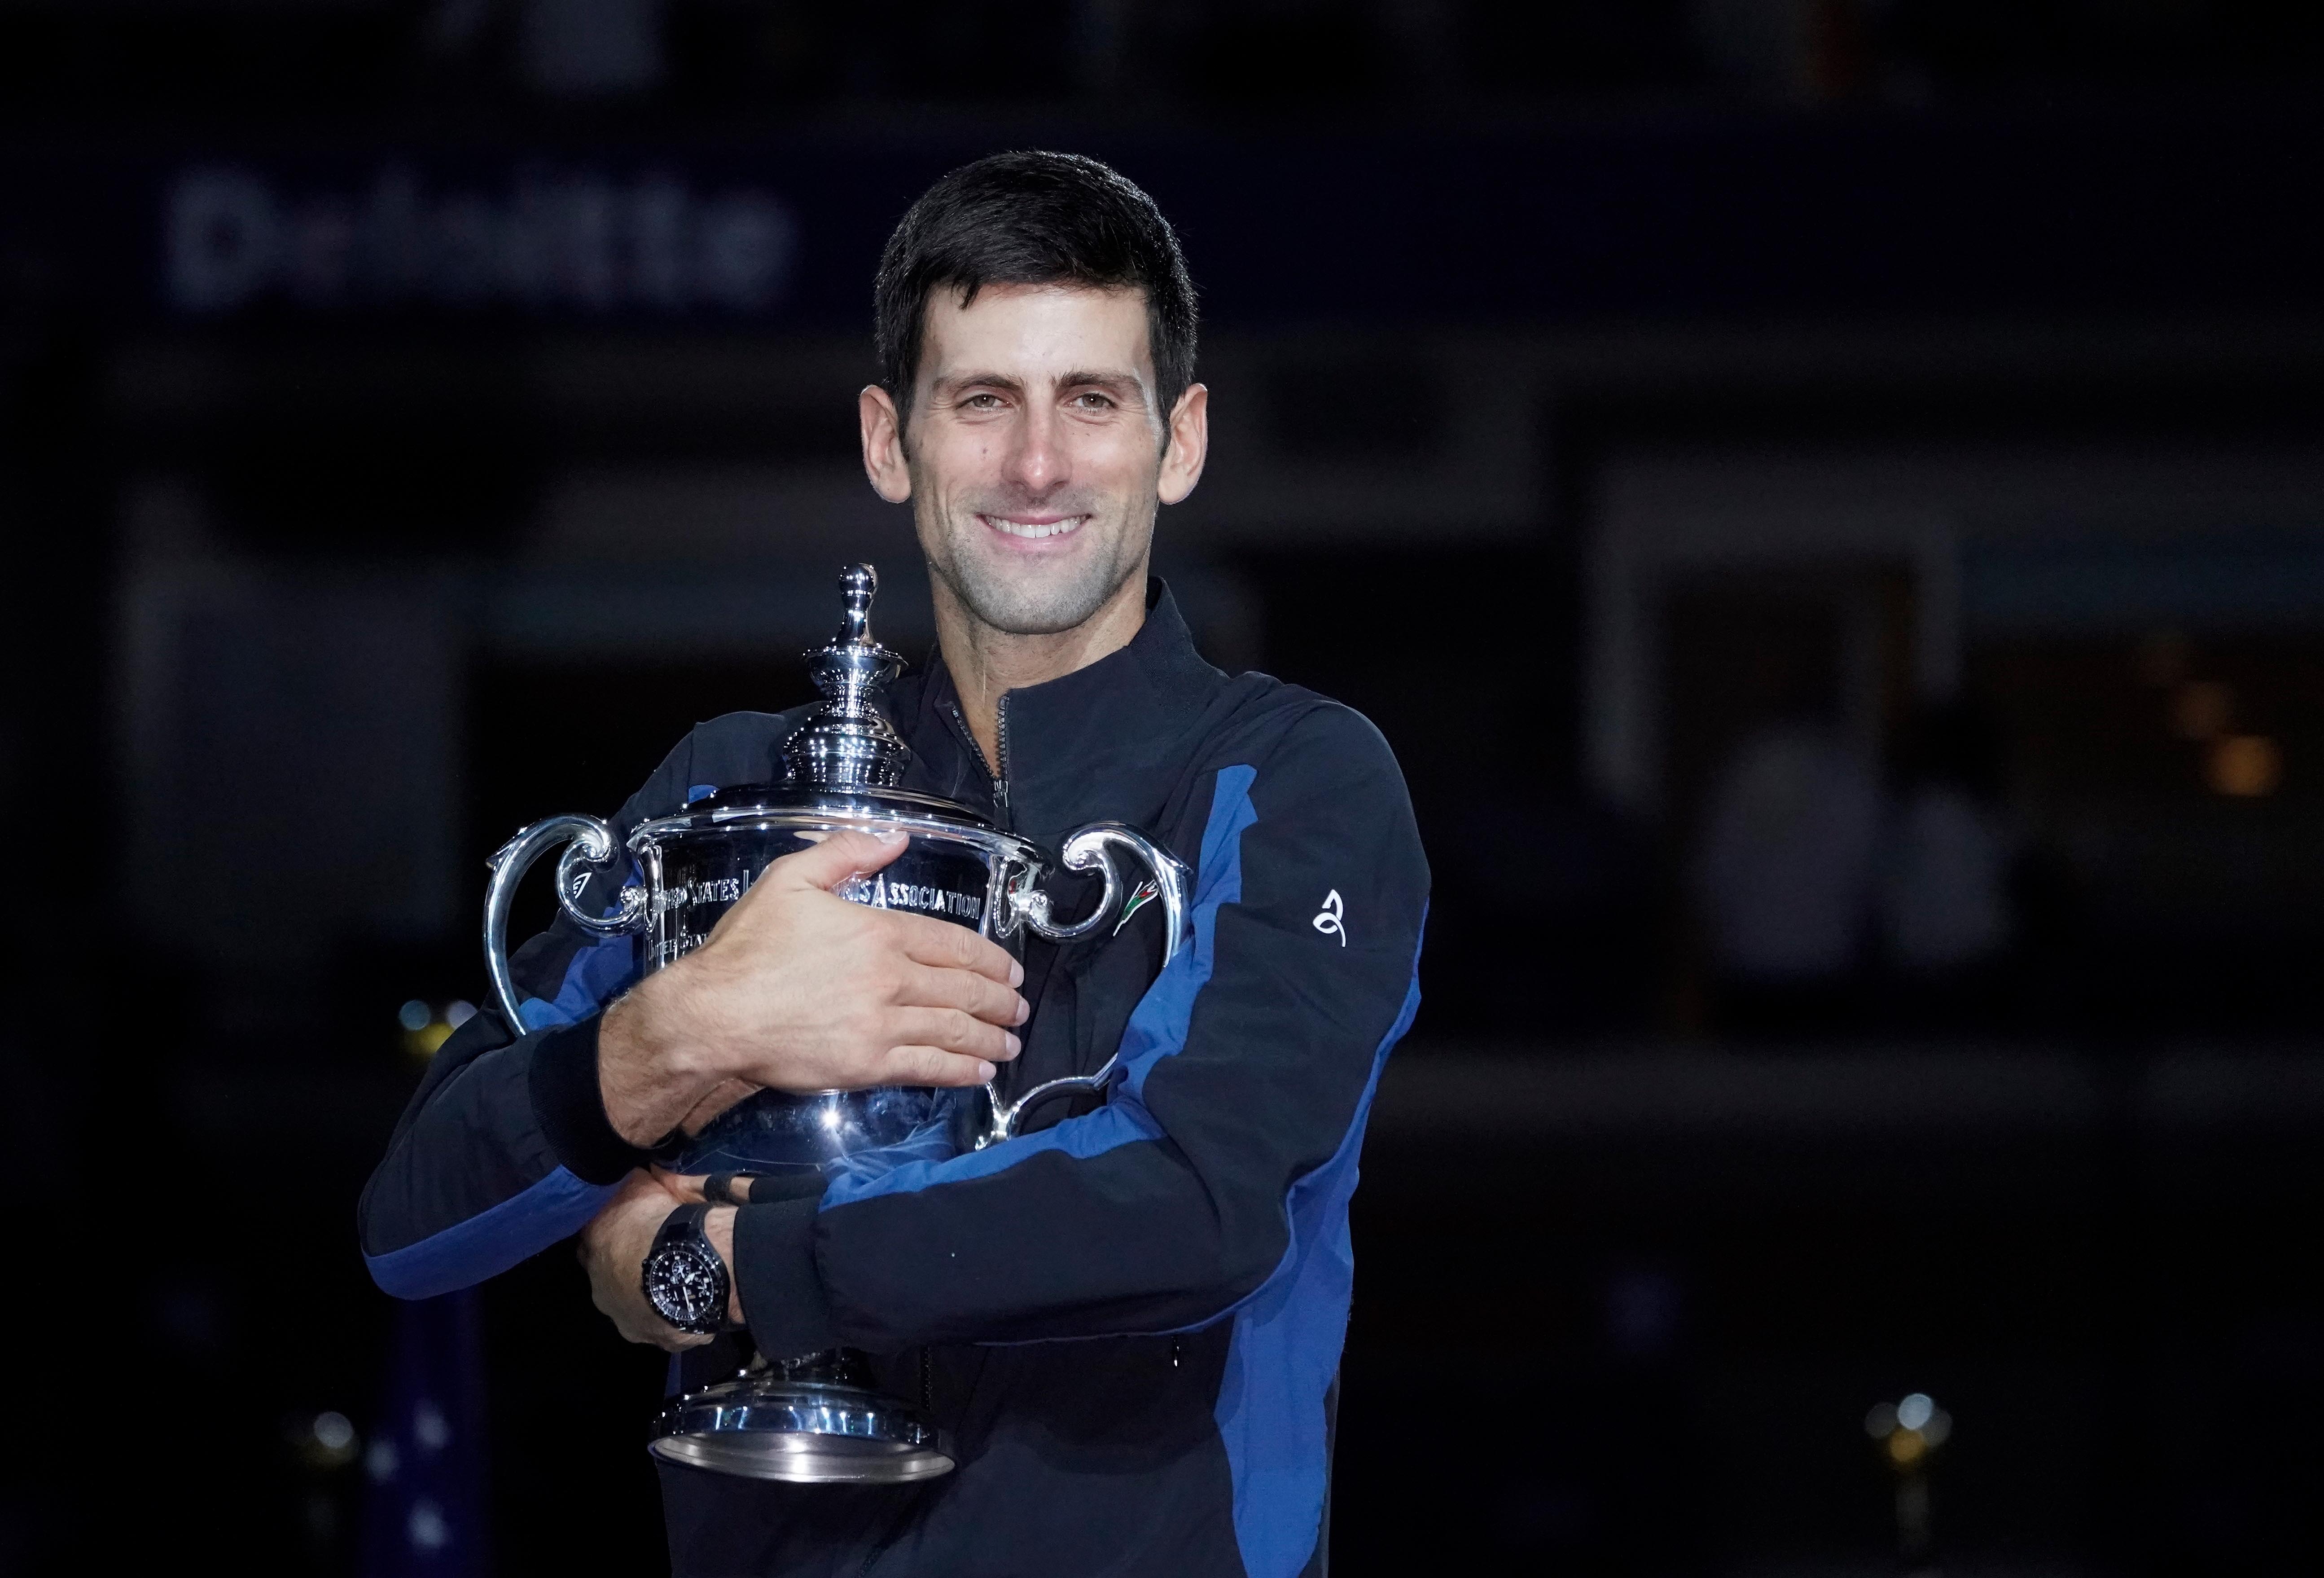 Tennis: Djokovic dismisses Del Potro to win US Open